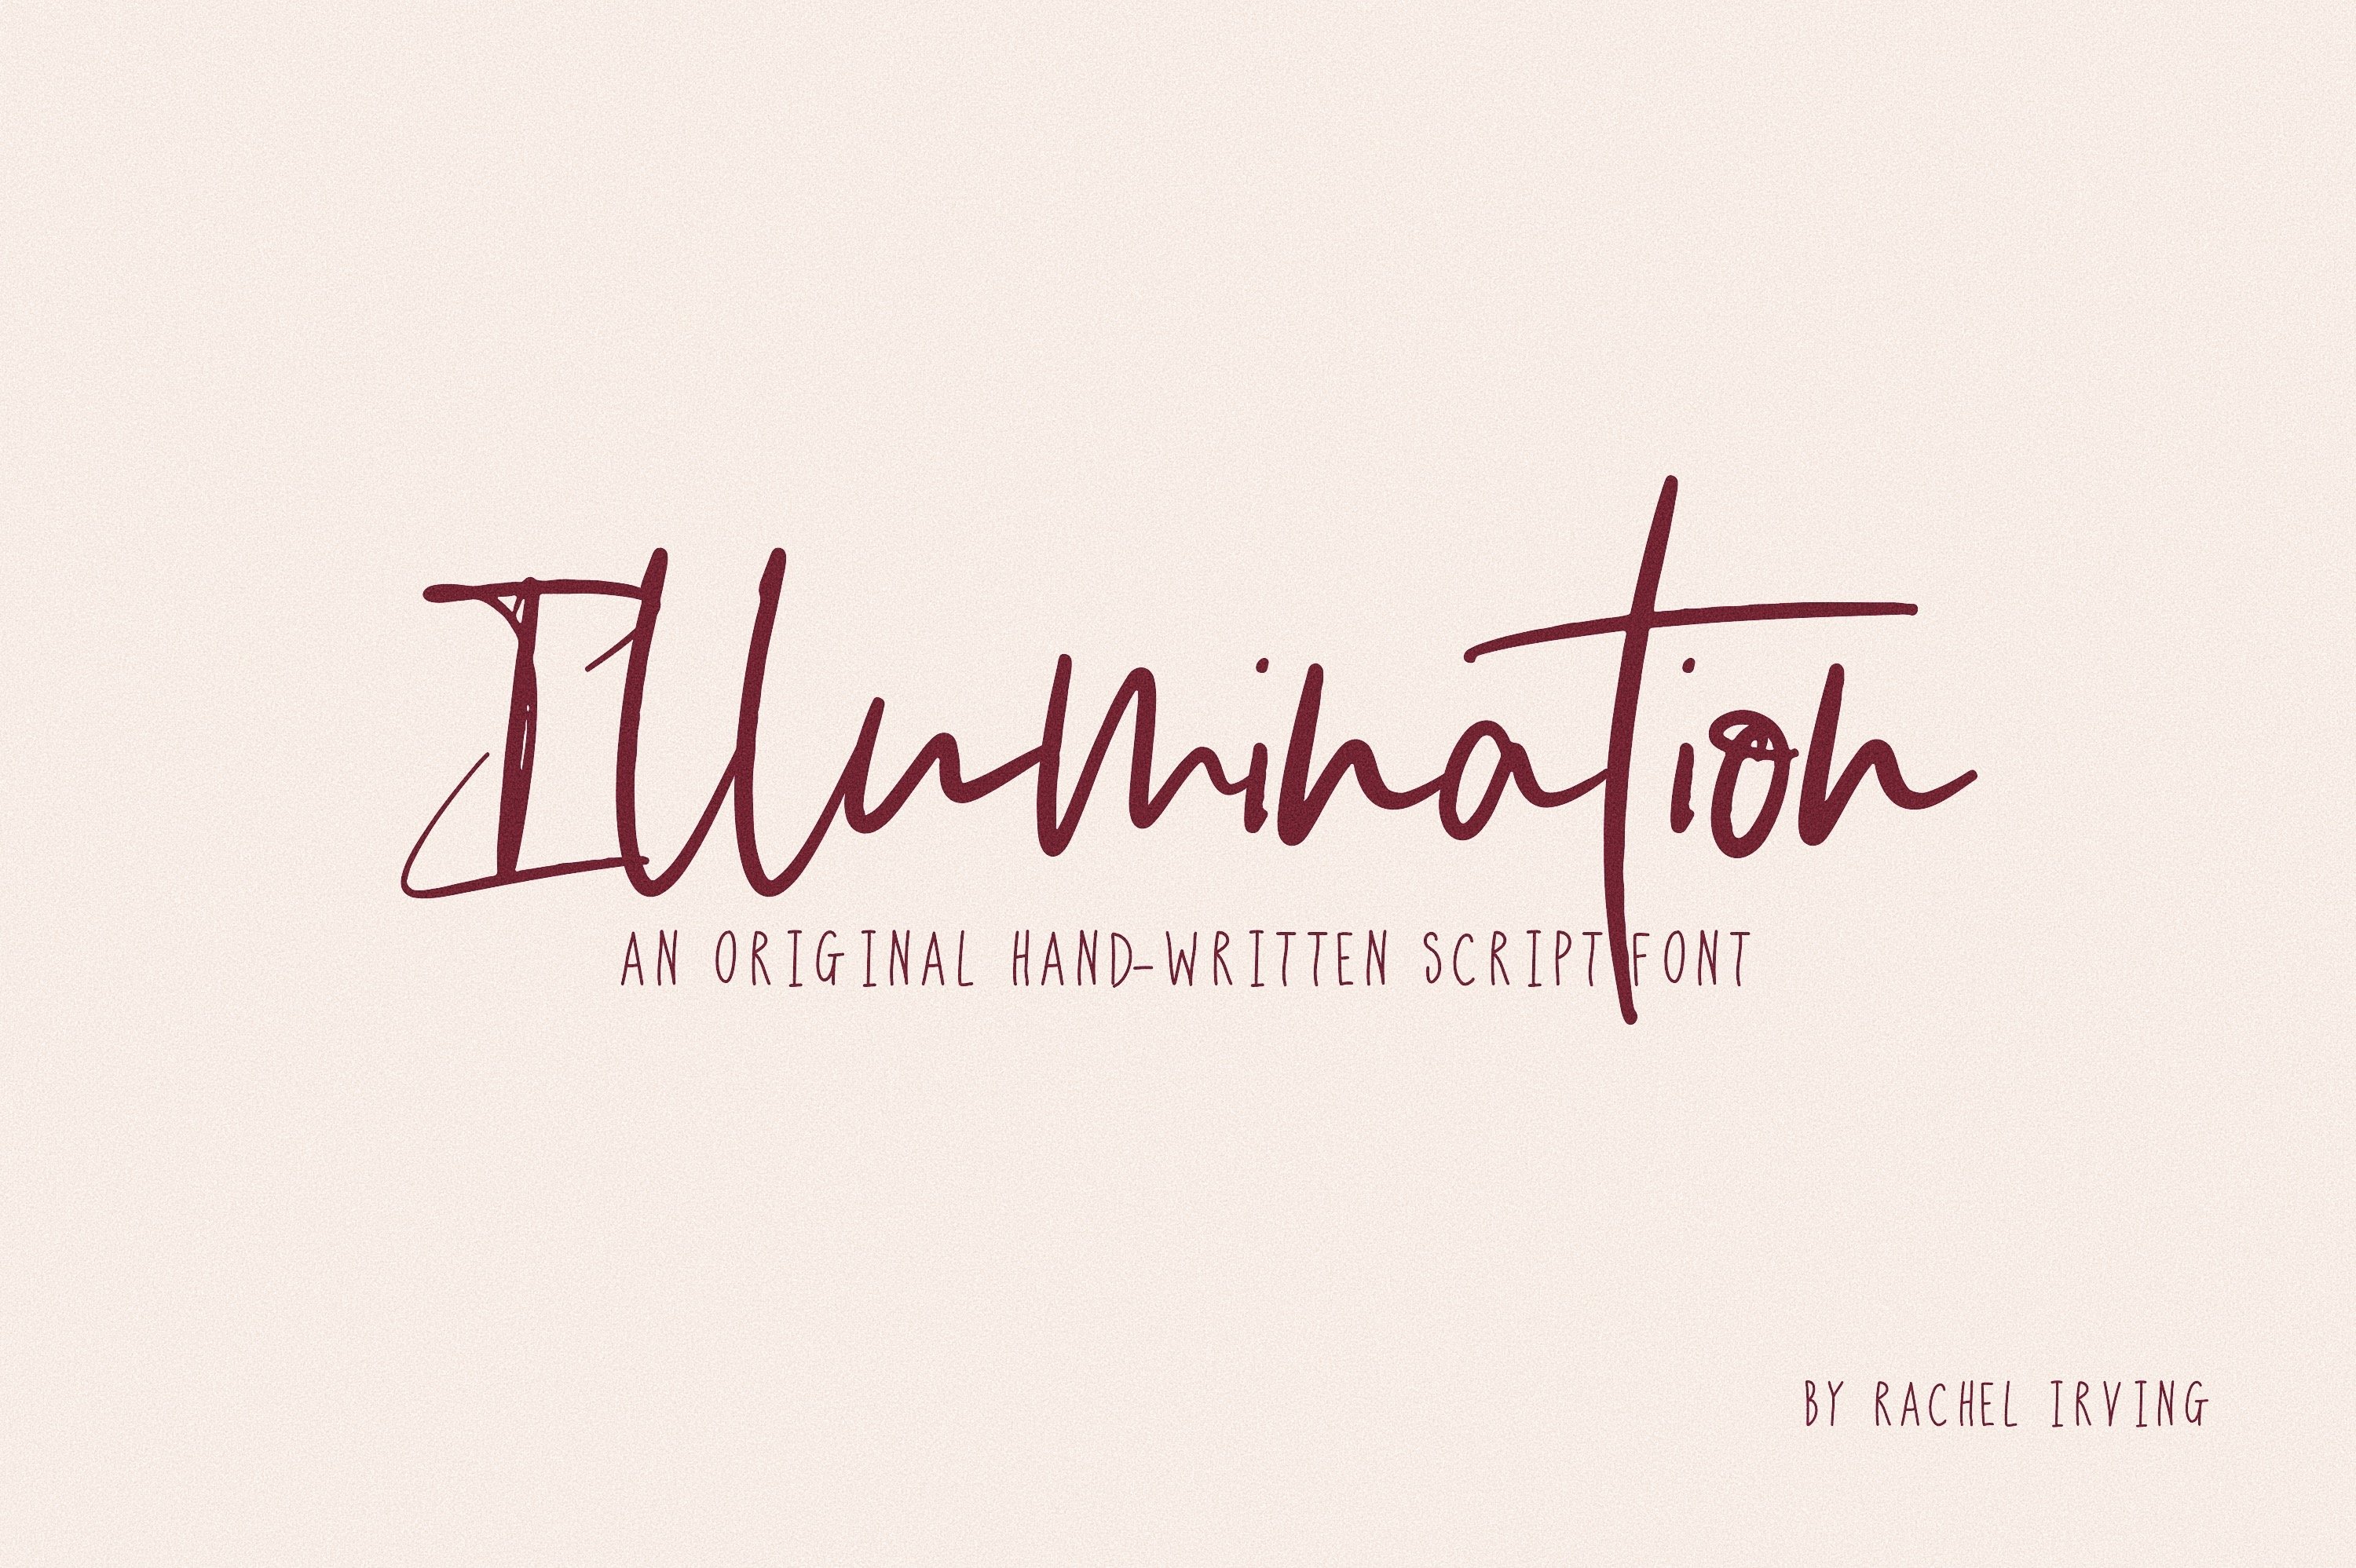 Illumination | Script Font cover image.